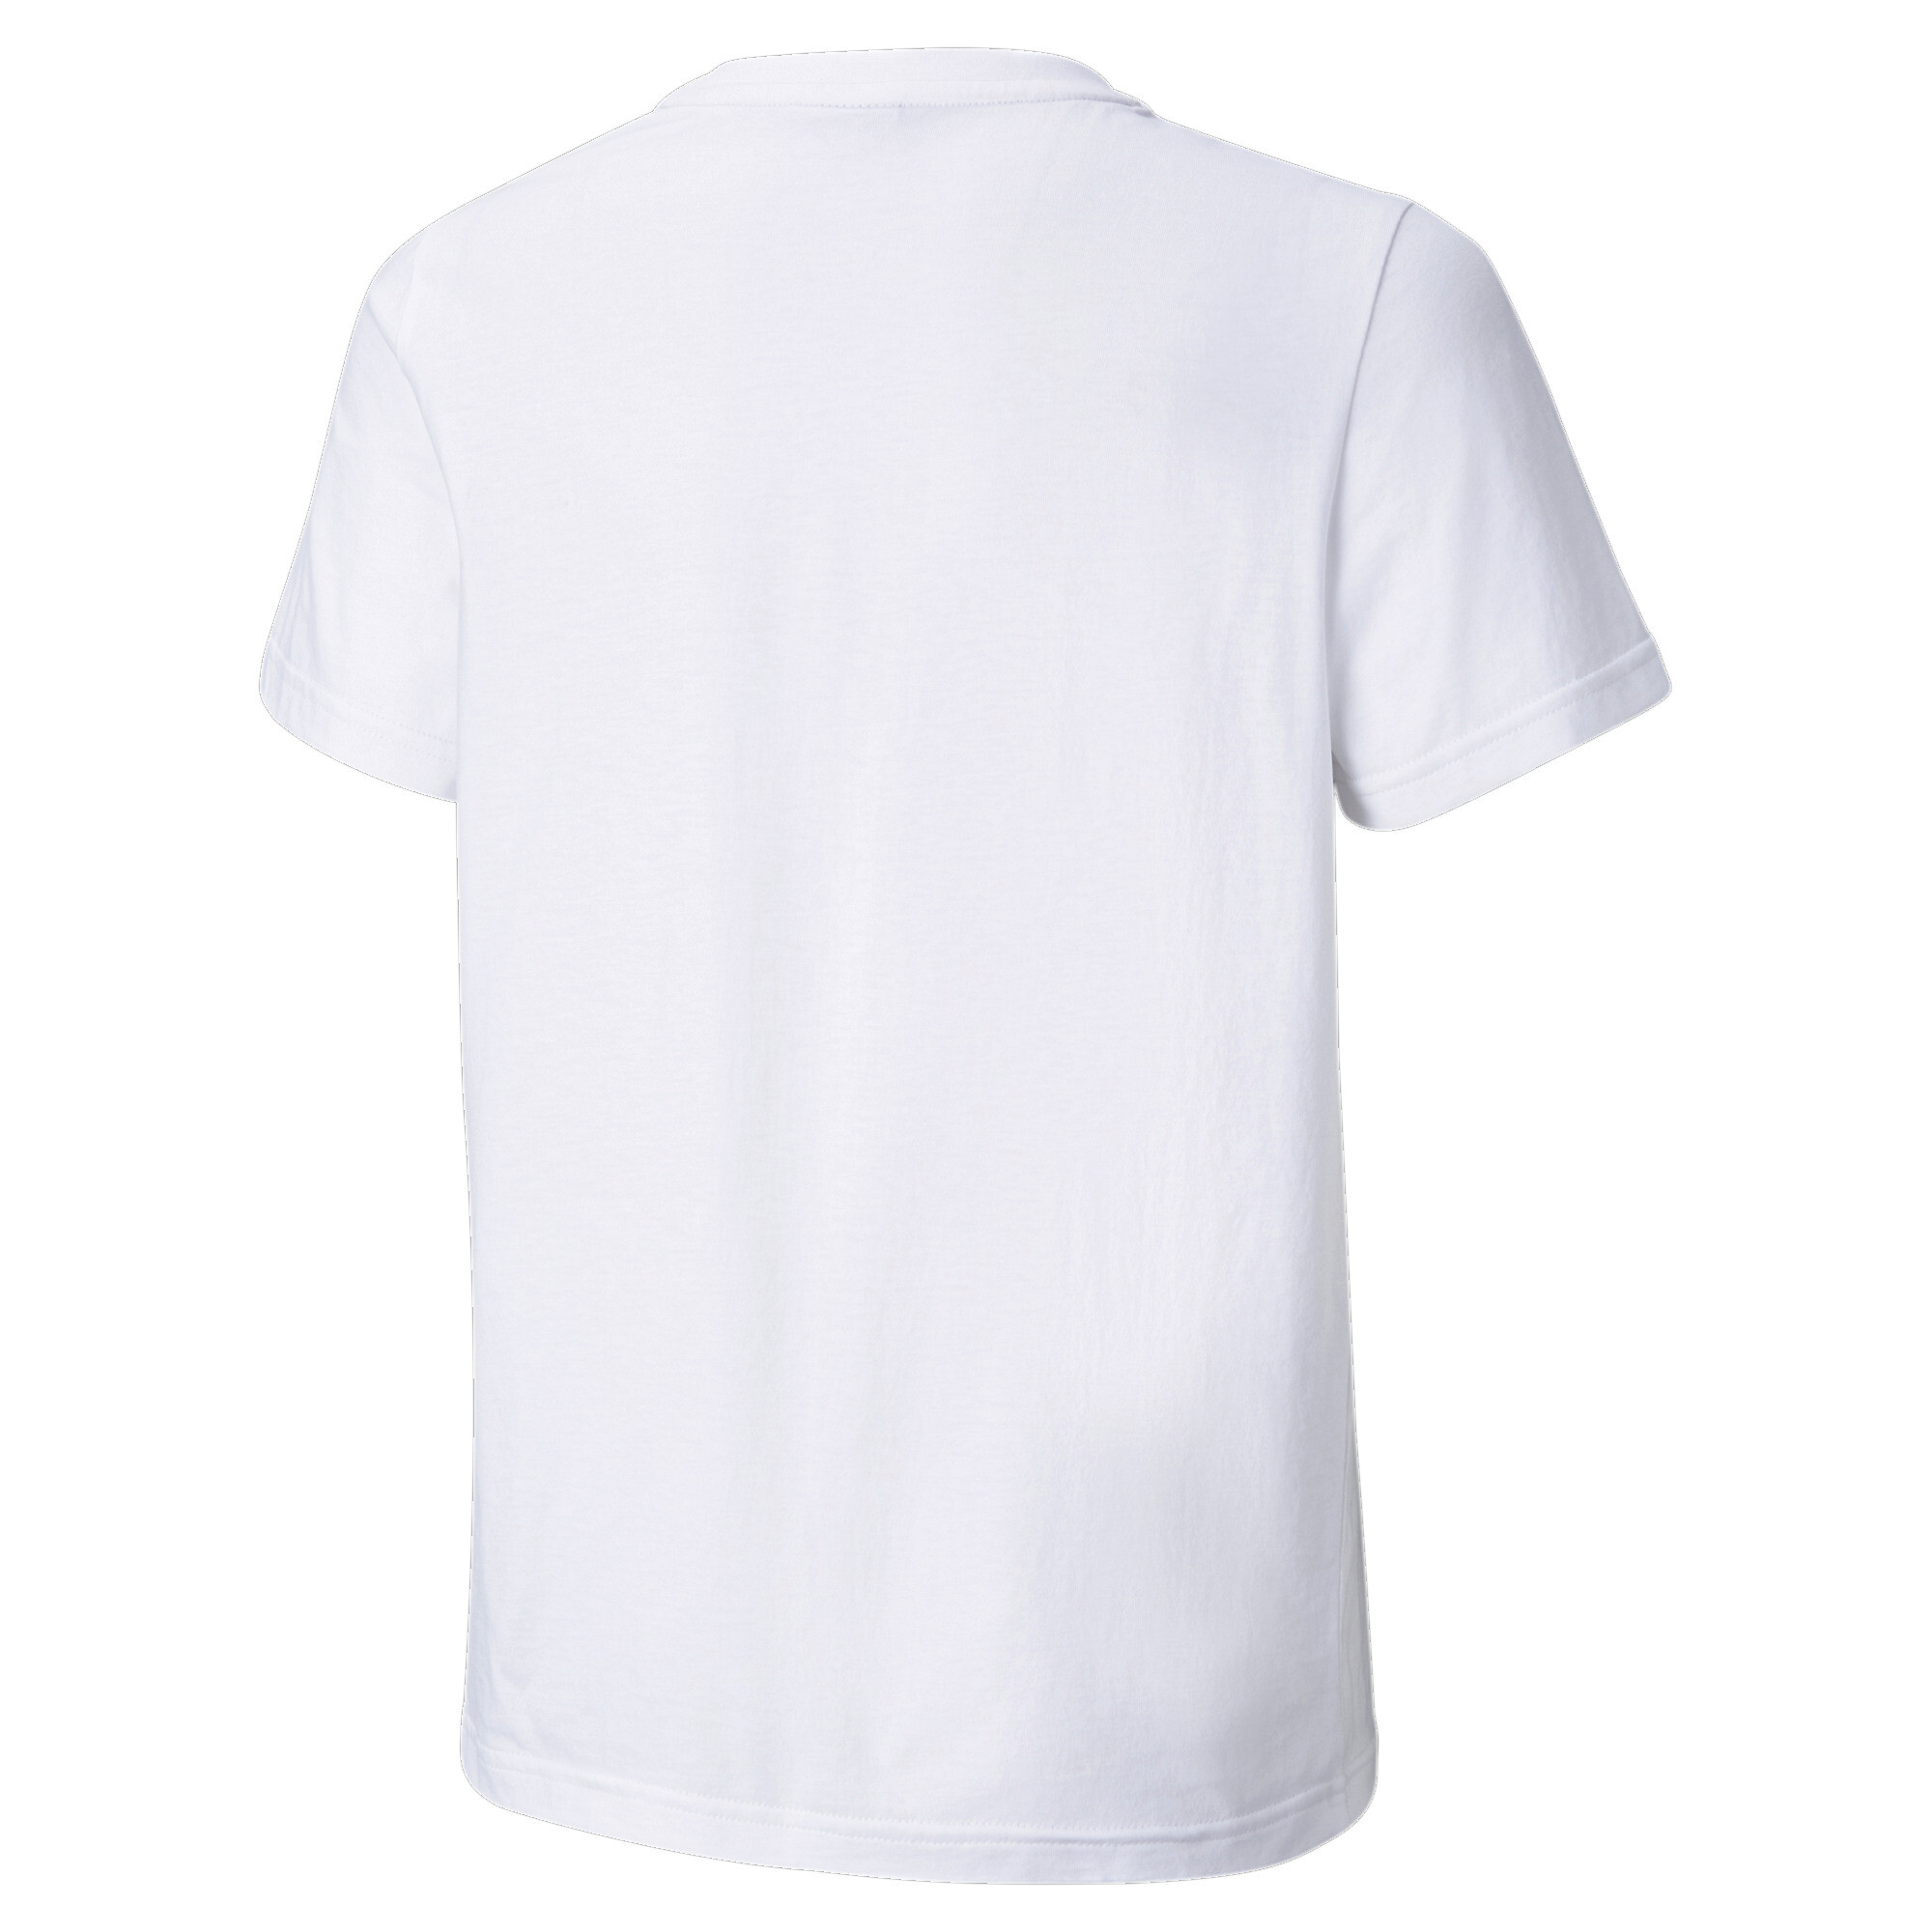 PUMA Classics B T-Shirt In White, Size 15-16 Youth